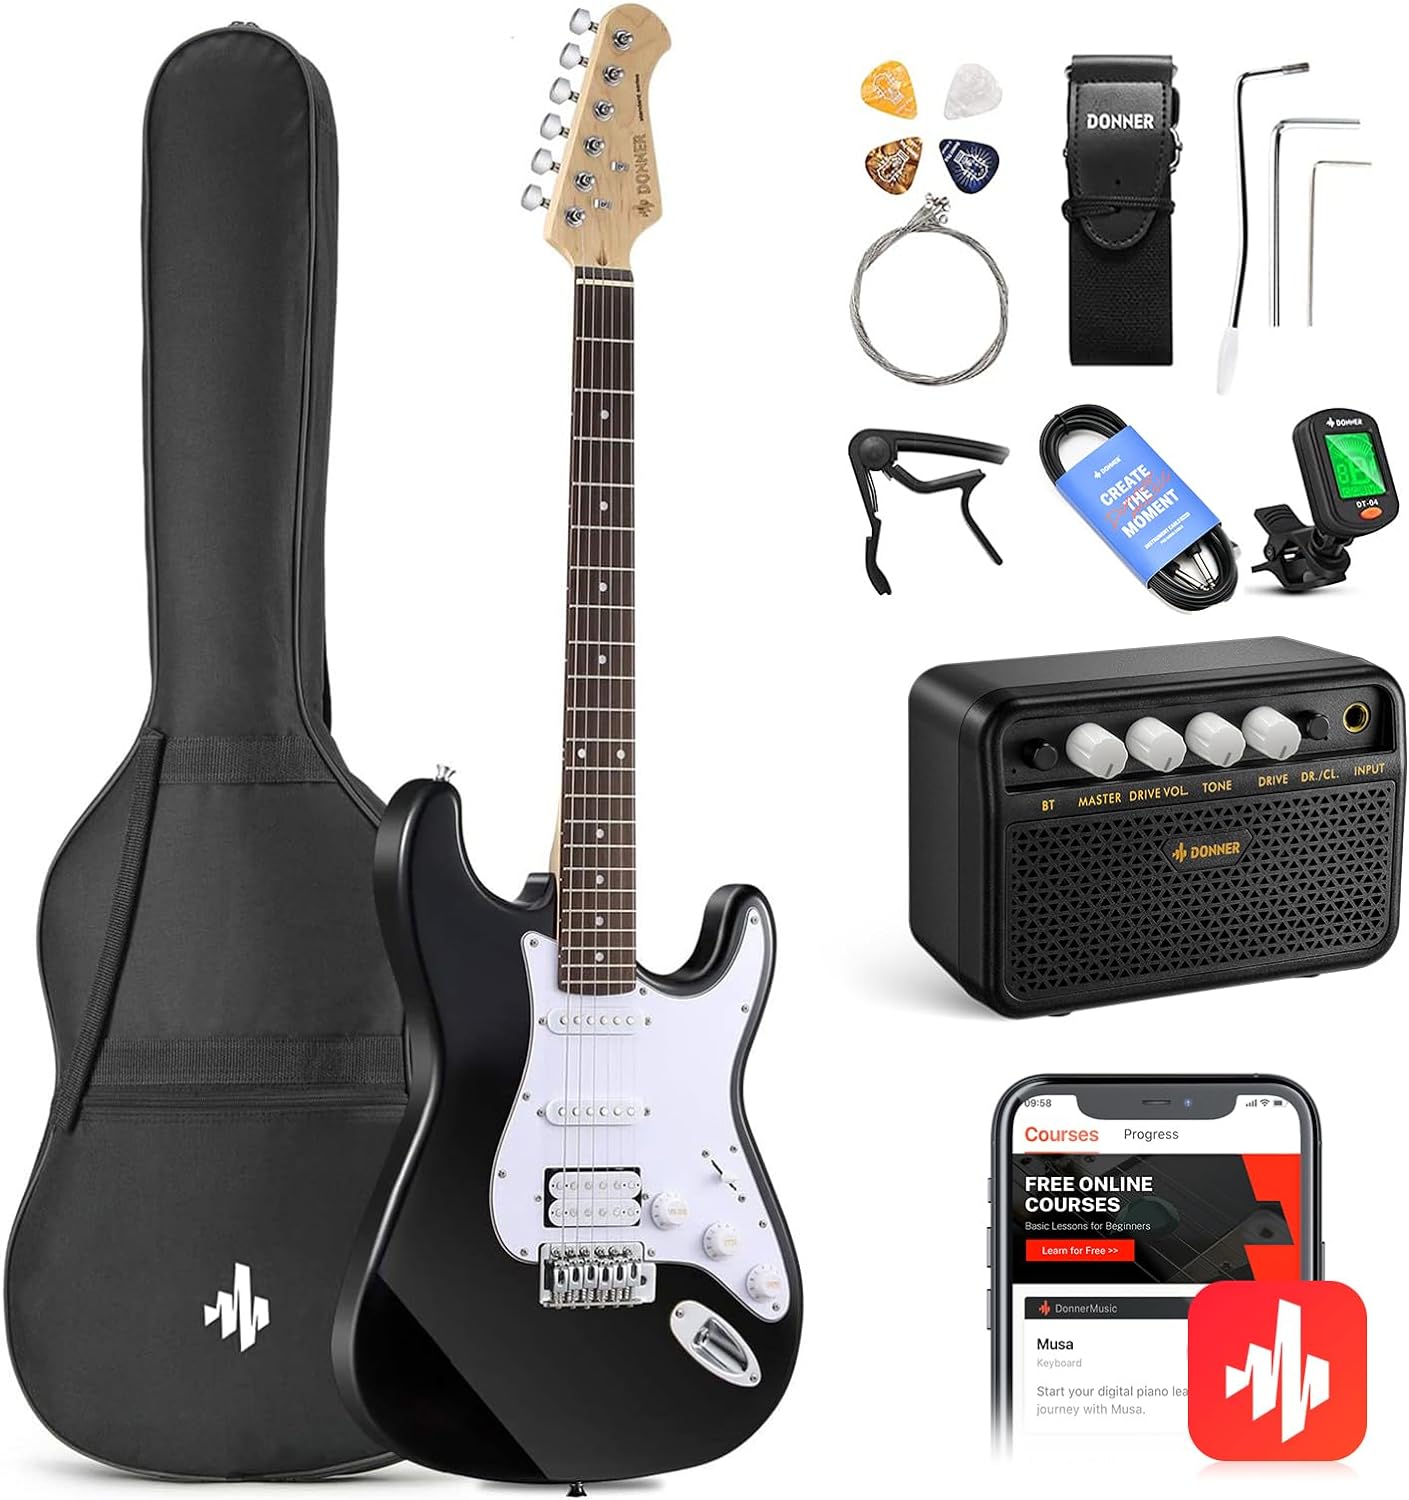 Donner DST-100B 39" Electric Guitar Beginner Kit Solid Body Full Size HSS for Starter, with Amplifier, Bag, Digital Tuner, Capo, Strap, String, Cable, Picks, Black - image 1 of 11